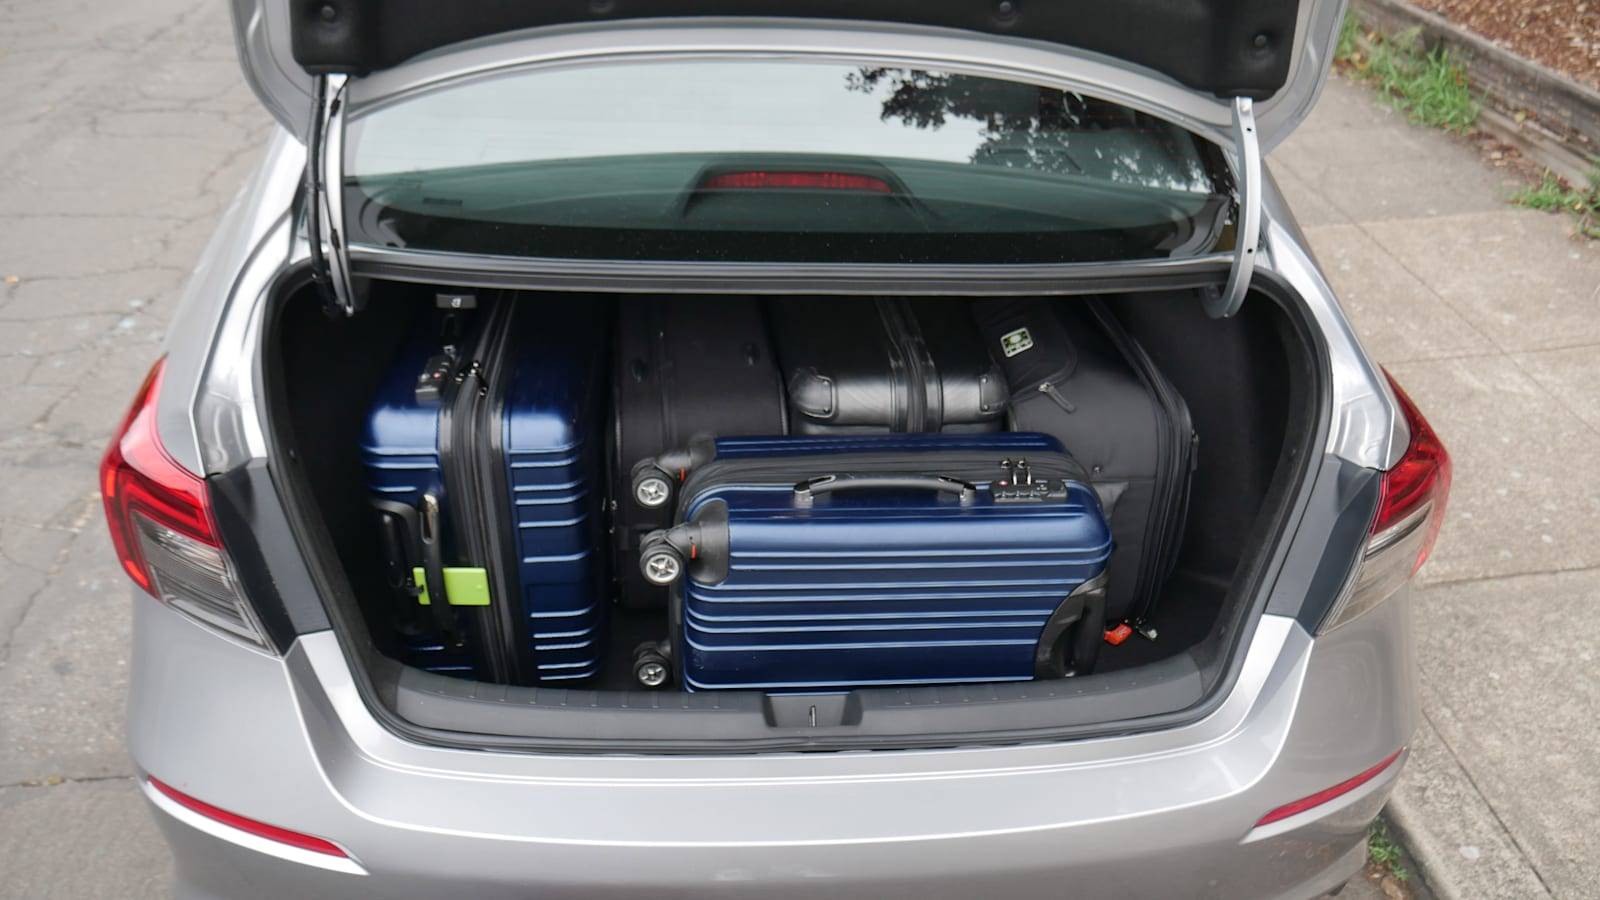 2022 Civic Luggage Capacity Test Shows Midsize Sedan Capability